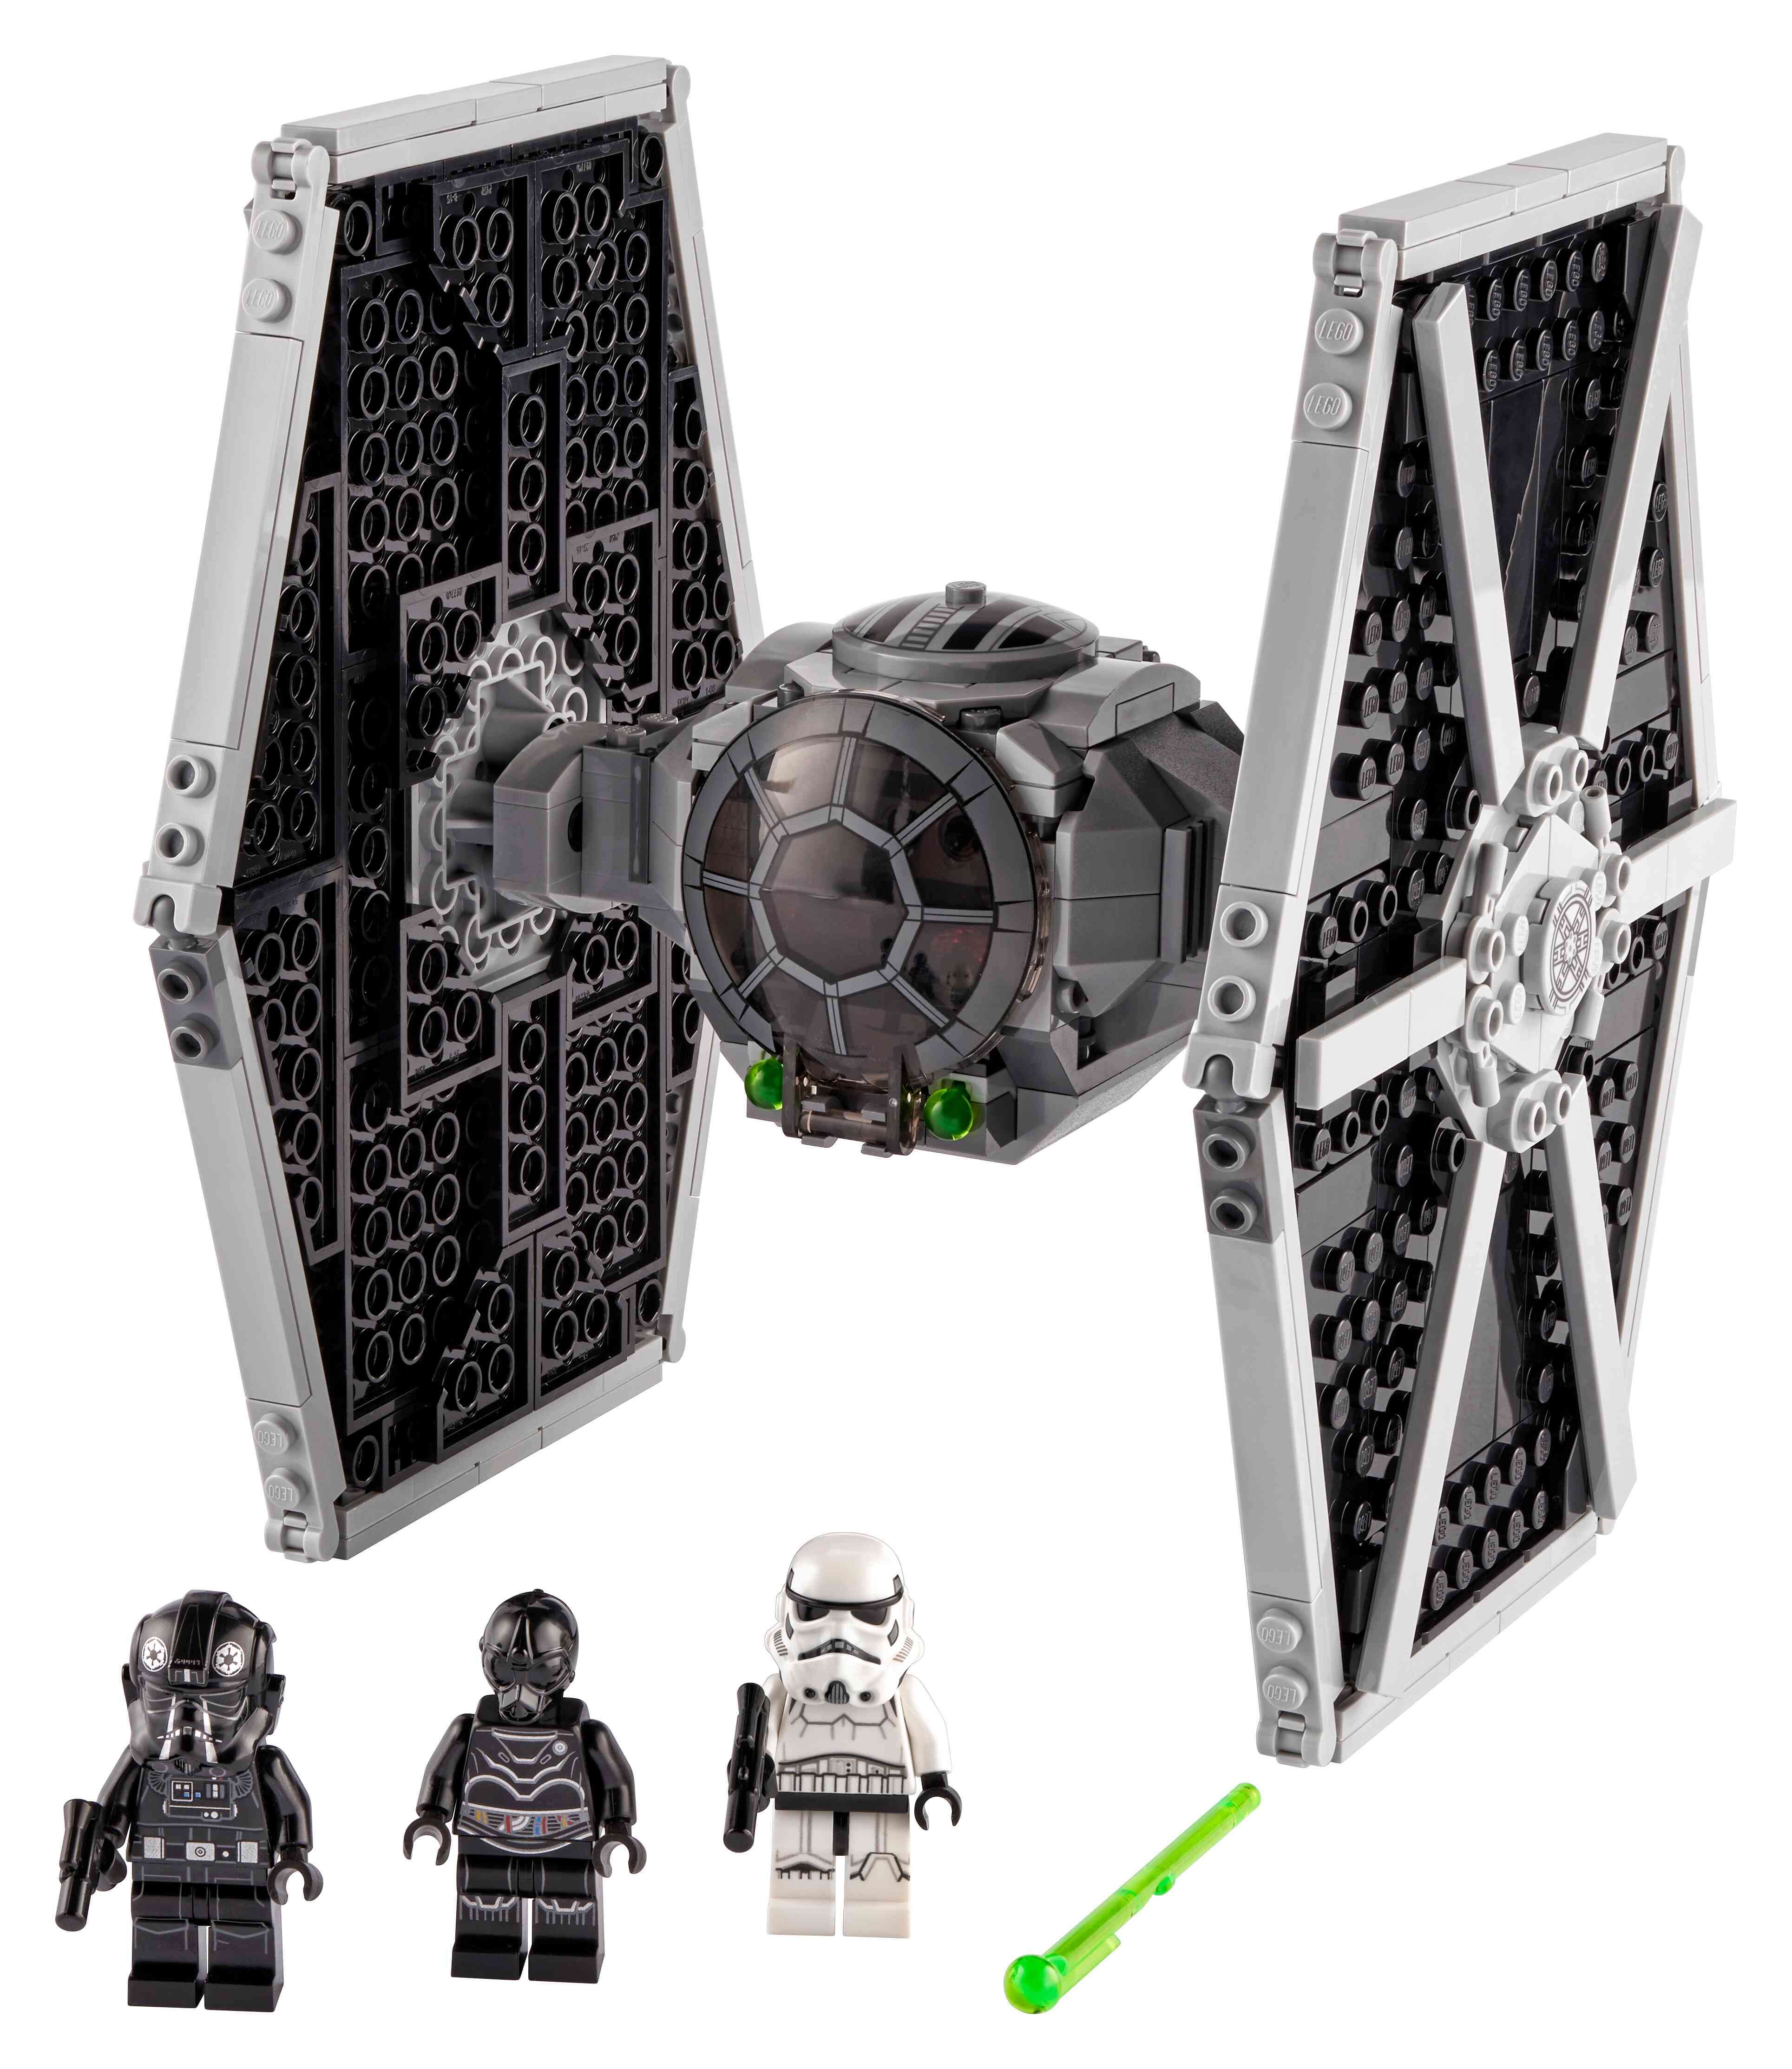 LEGO 75300 Star Wars Imperial TIE Fighter, Sturmtruppler, Pilot, Protokolldroide